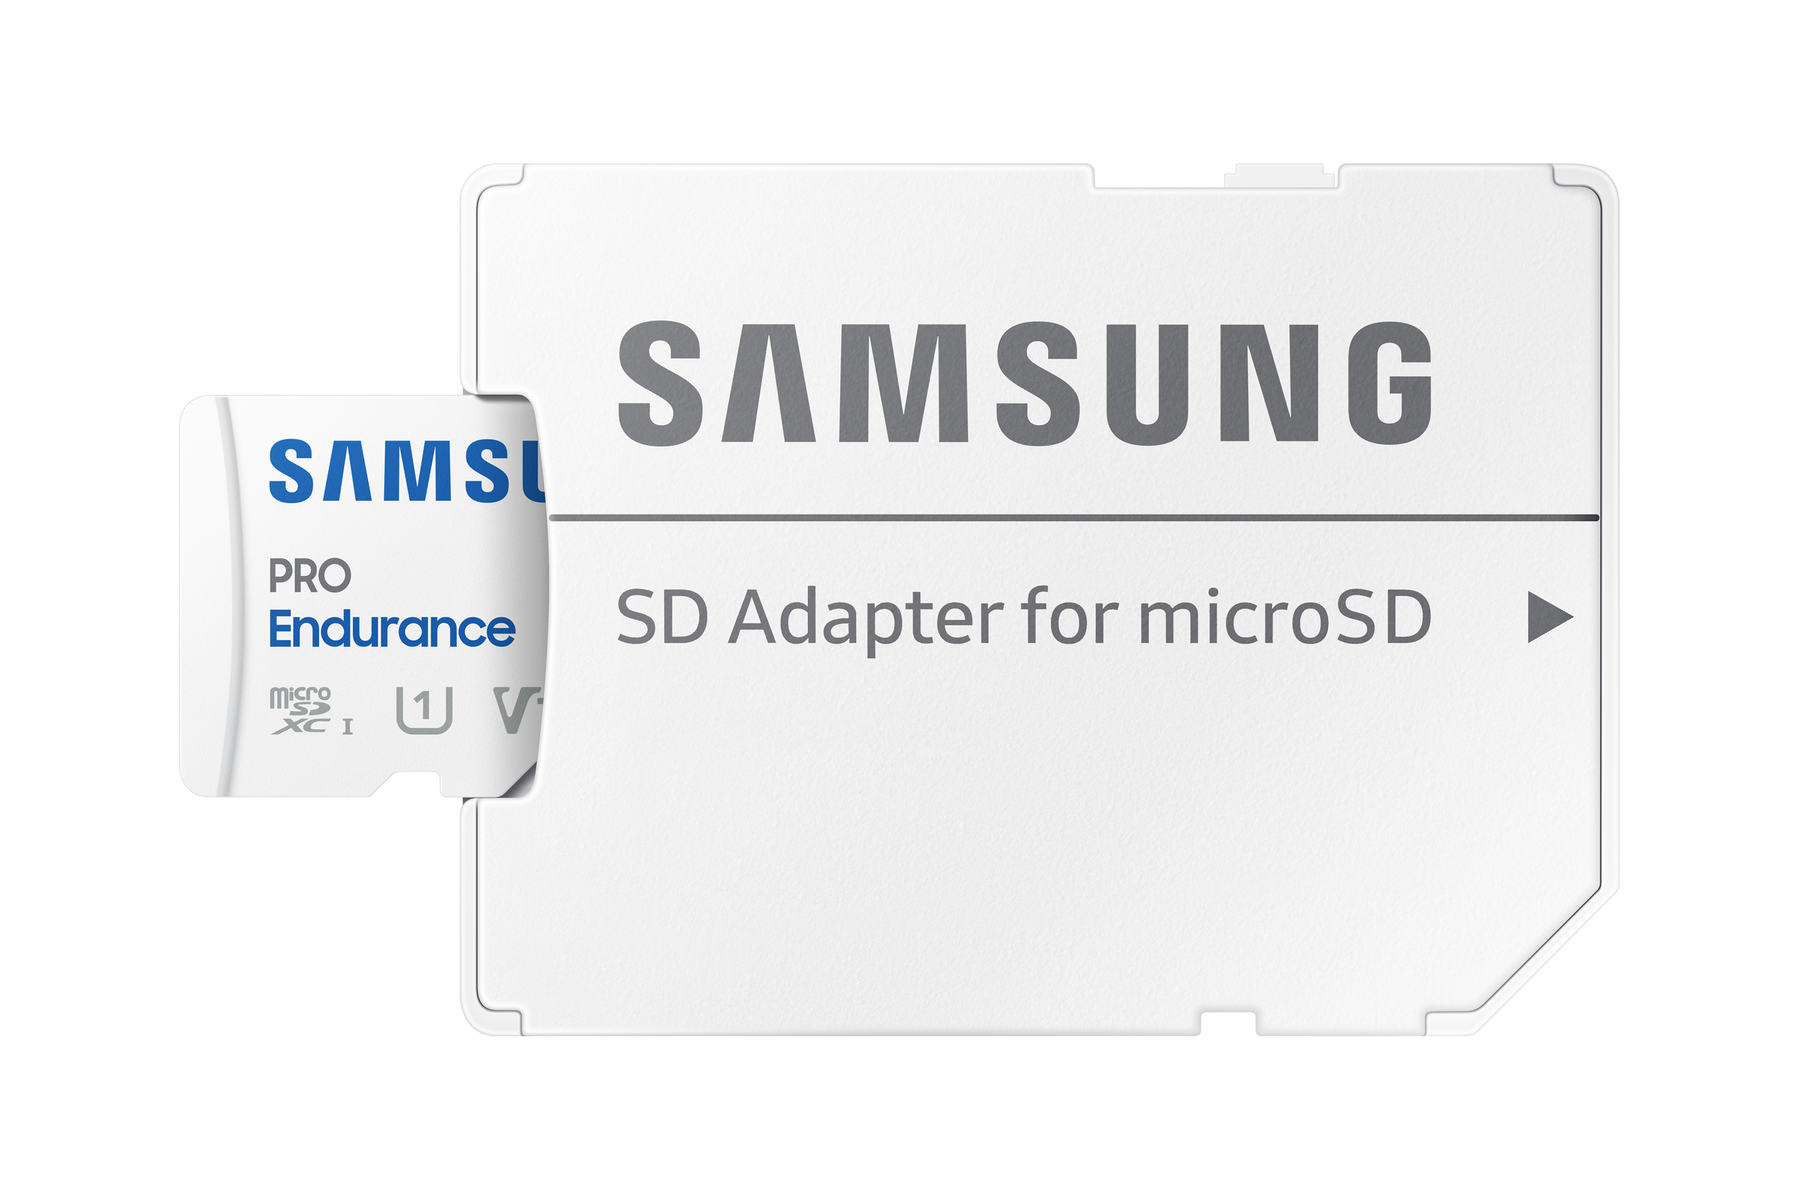 Micro-SDXC MB-MJ64KA/EU 64 SAMSUNG GB, MB/s 64GB, Speicherkarte, PRO ENDURANCE 100